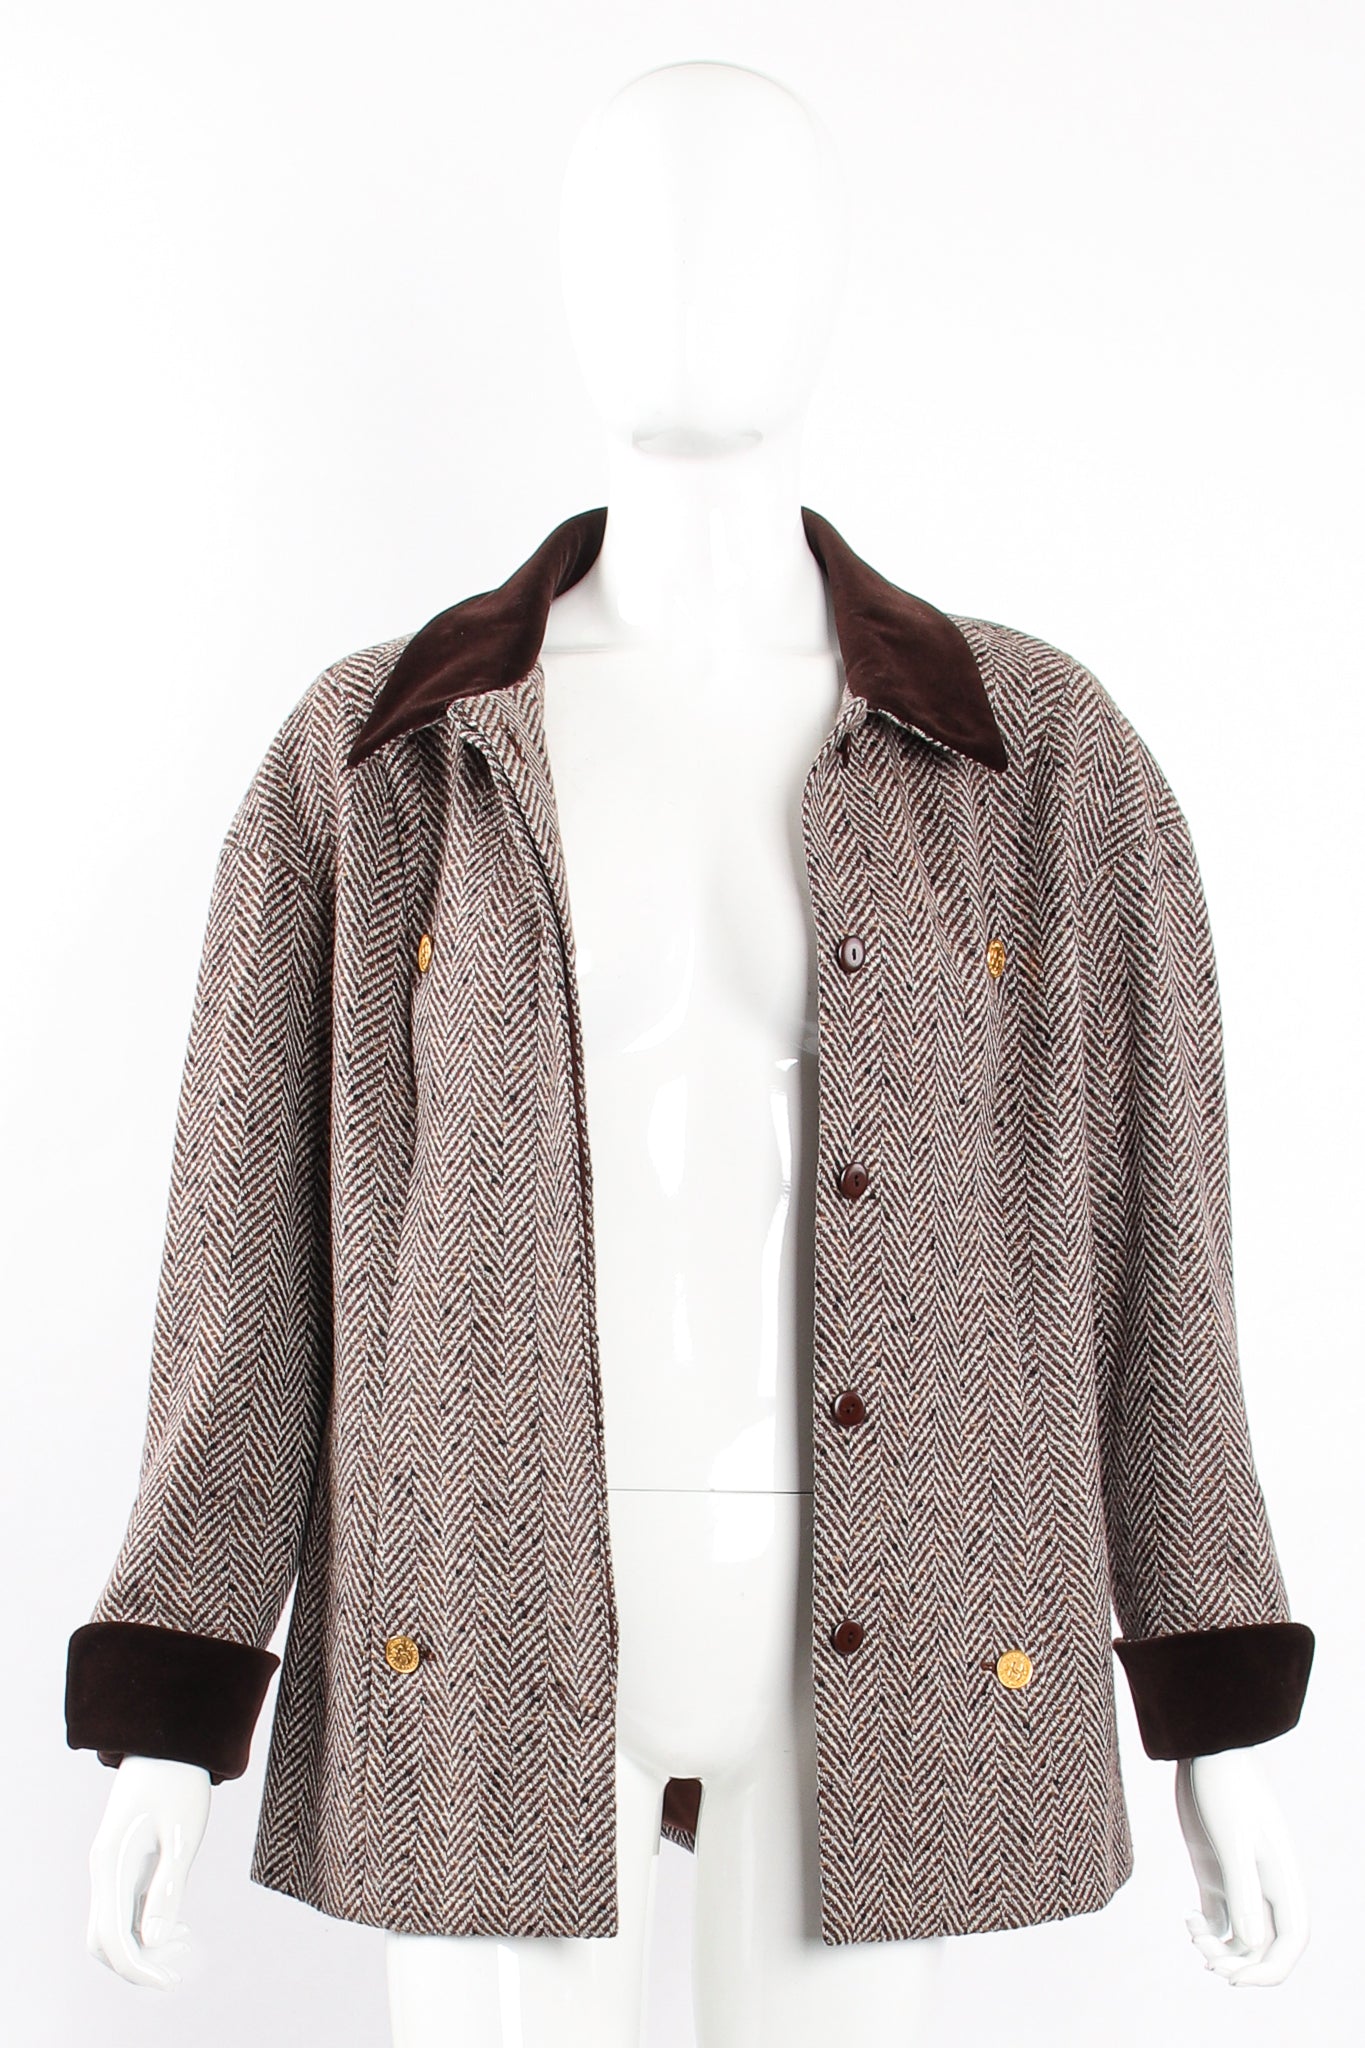 Vintage Chanel Herringbone Tweed Velvet Jacket & Skirt Set on Mannequin front jacket at Recess LA